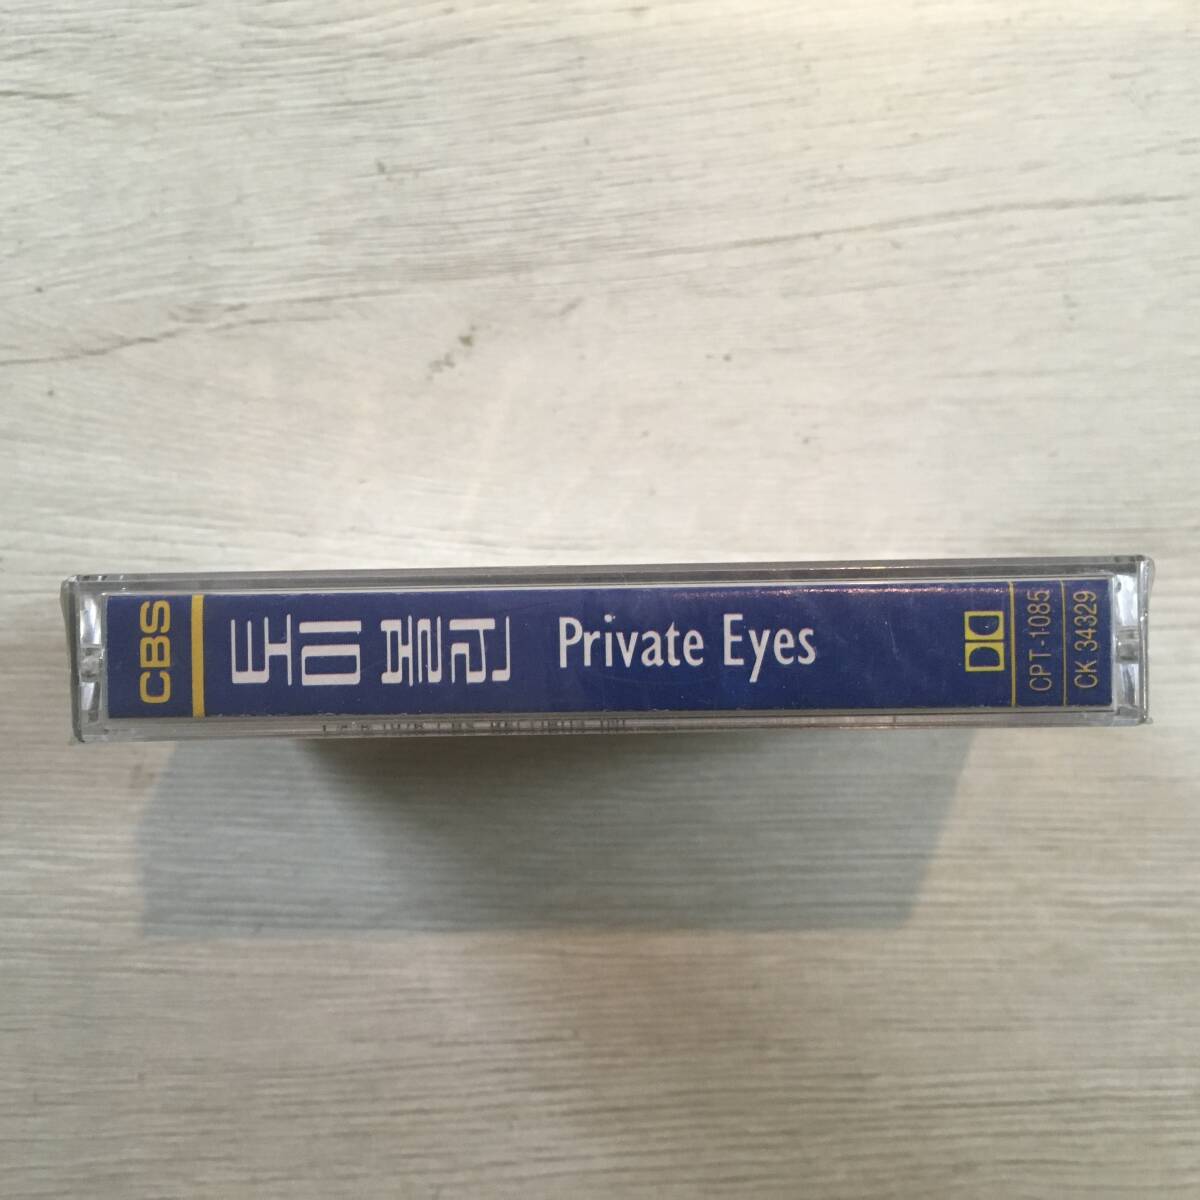 KOREA TOMMY BOLIN PRIVATE EYES кассета Корея запись новый товар нераспечатанный DEEP PURPLE